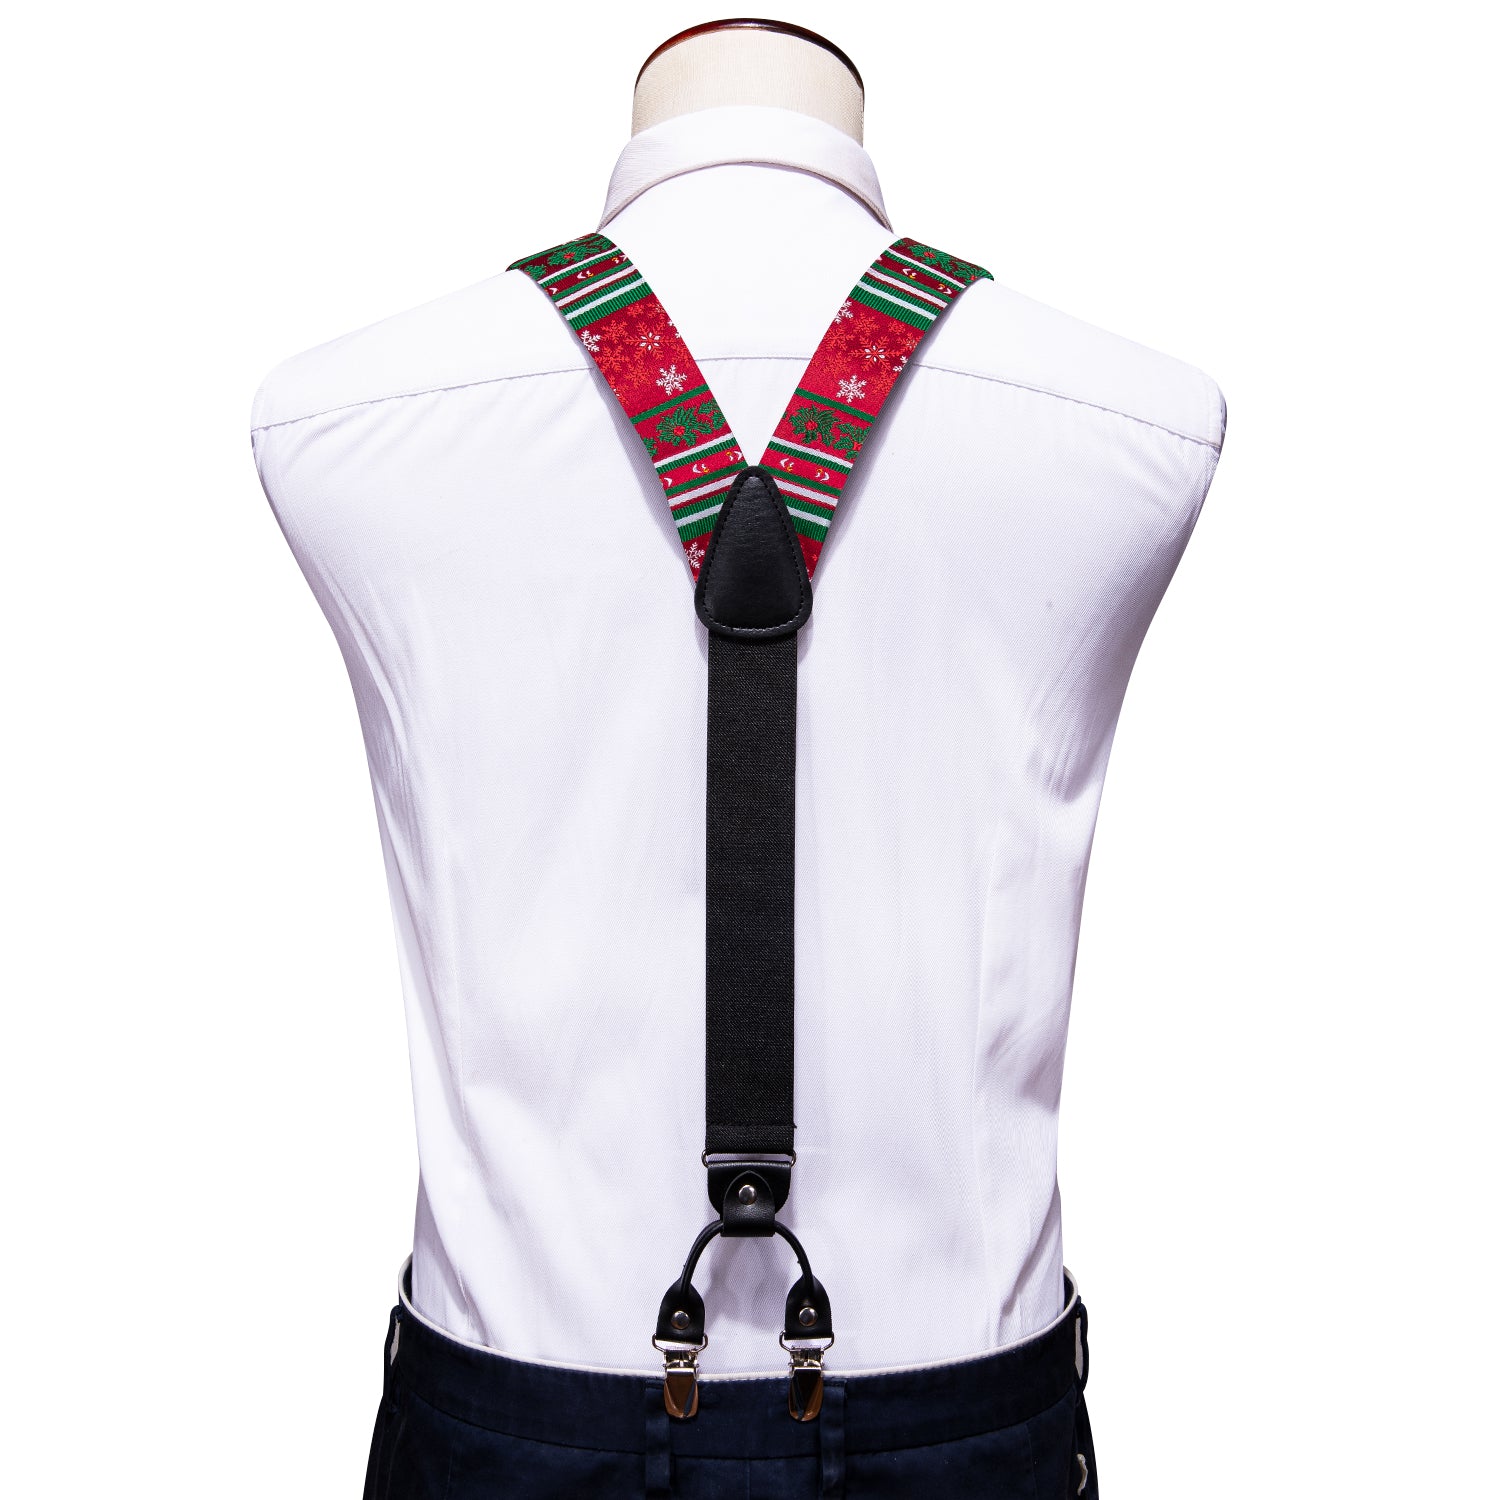 Barry.wang Men's Christmas Tie Red Green Y Back Adjustable Bow Tie Suspenders Set